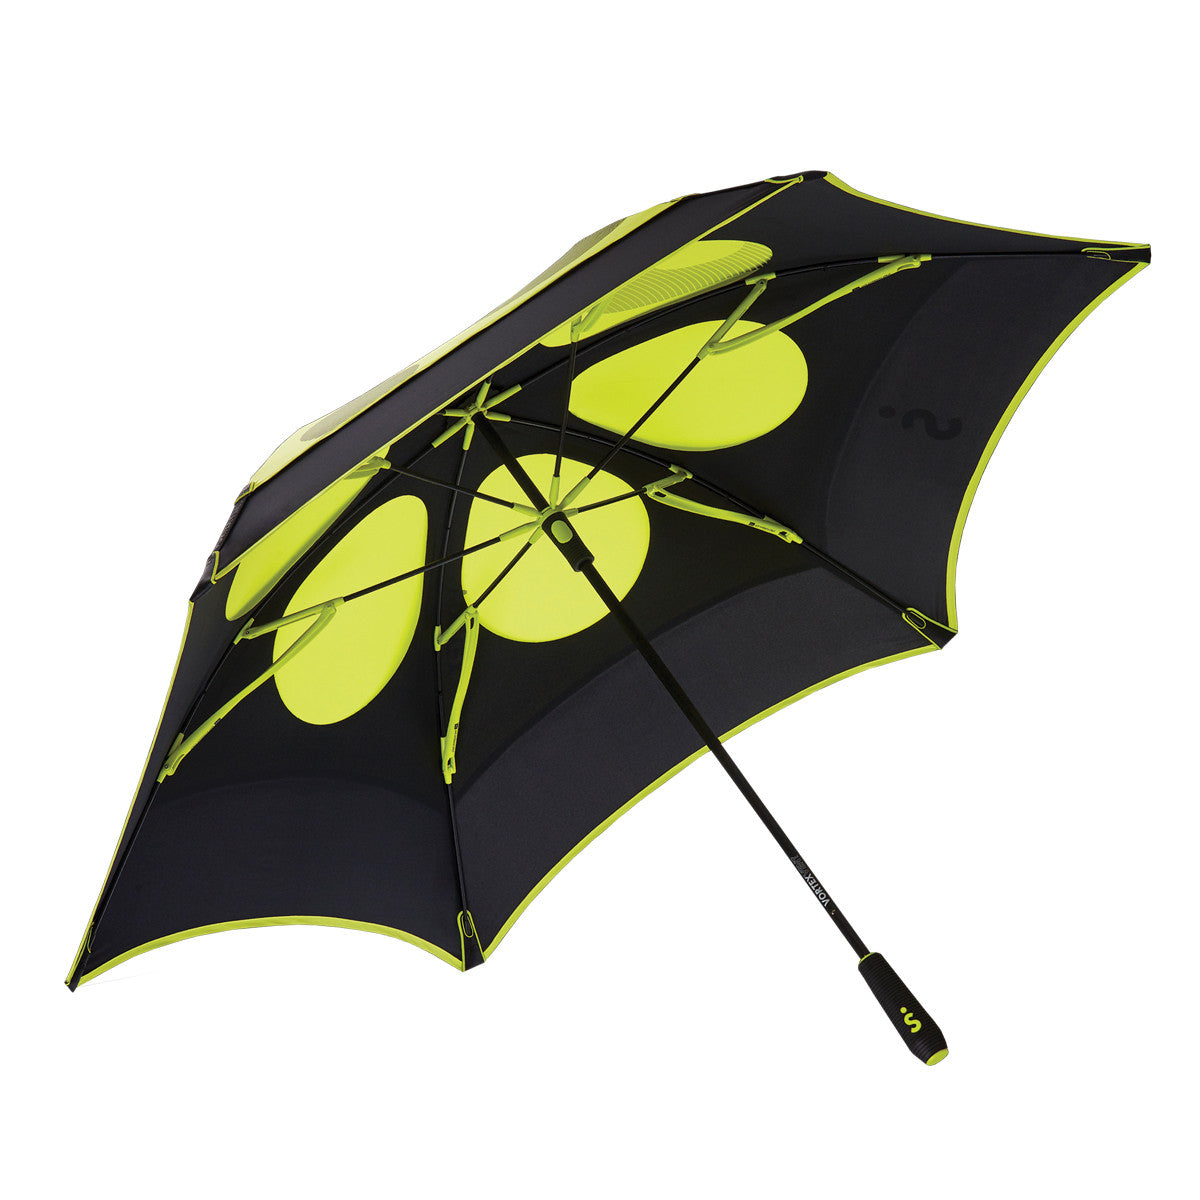 Double Canopy Wind Resistant Stick Umbrella​